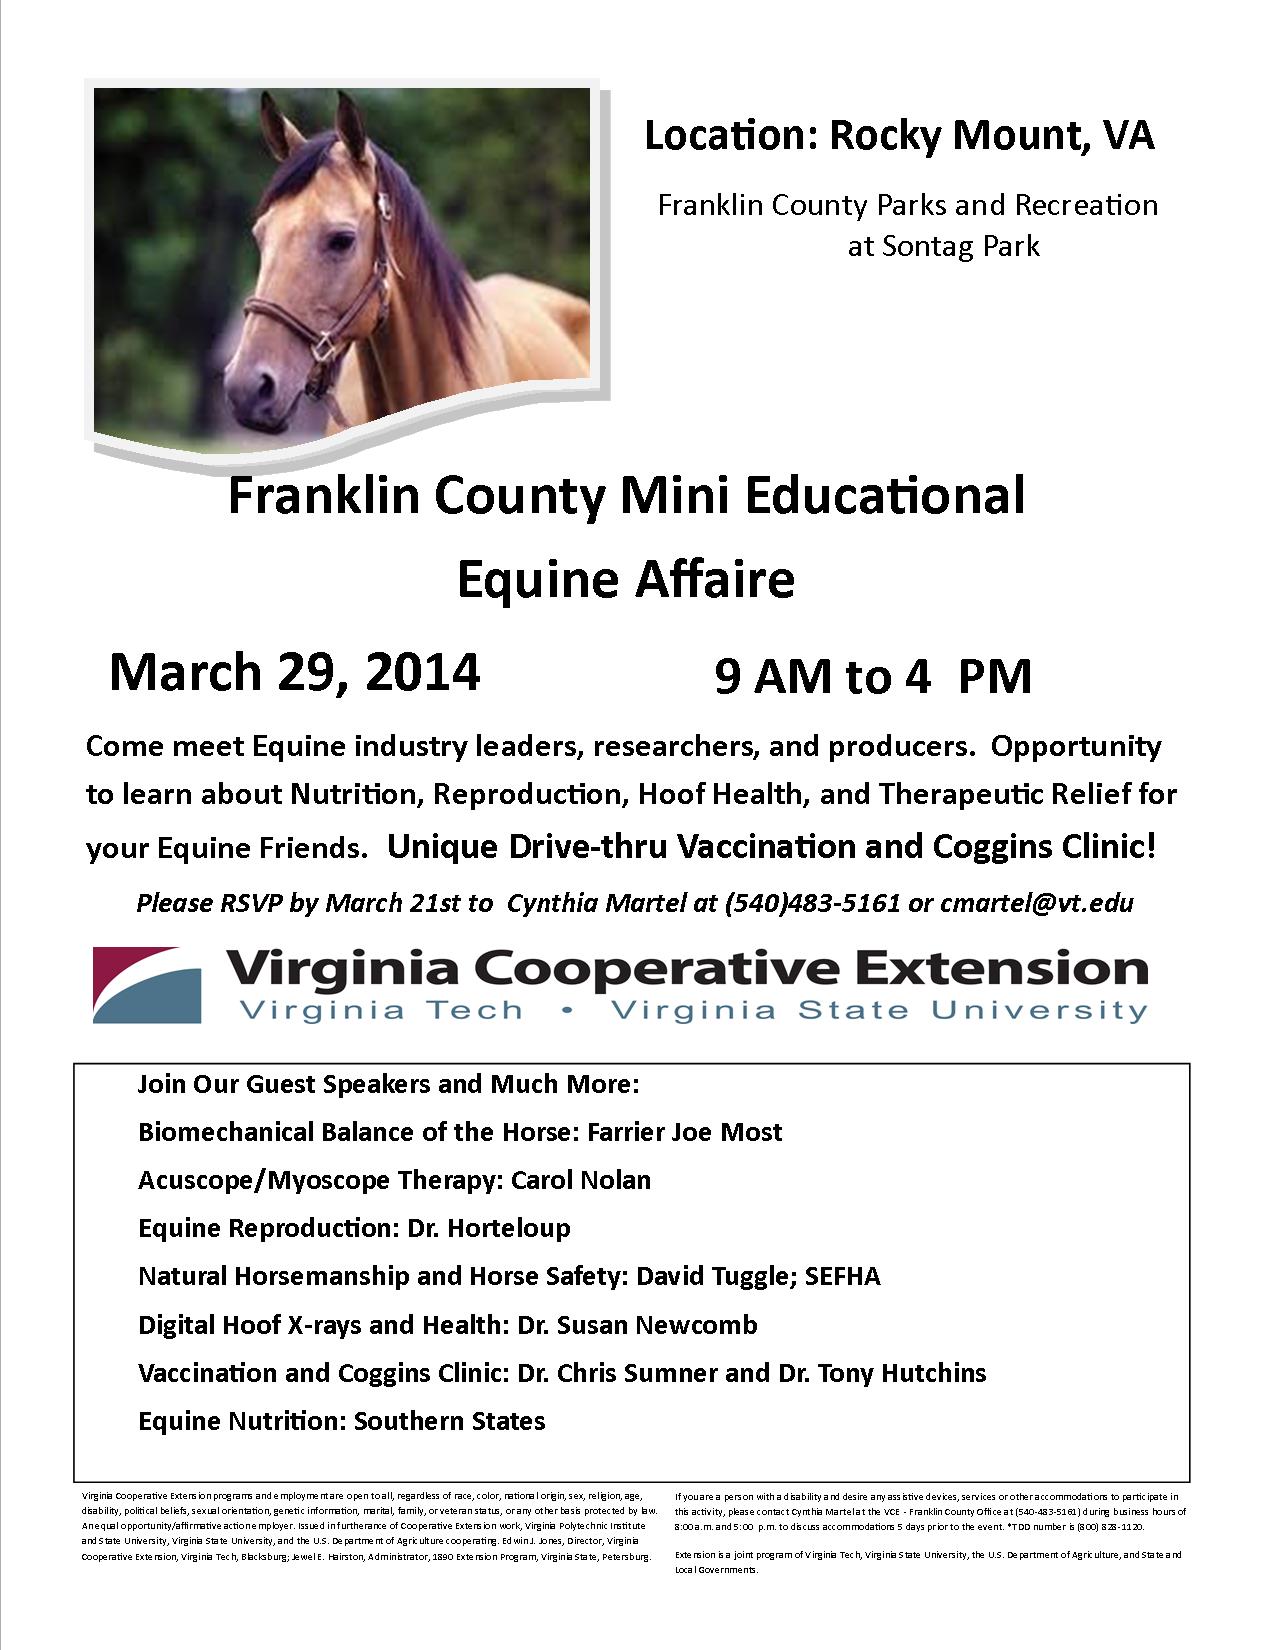 2014 Franklin County Mini Educational Equine Affaire